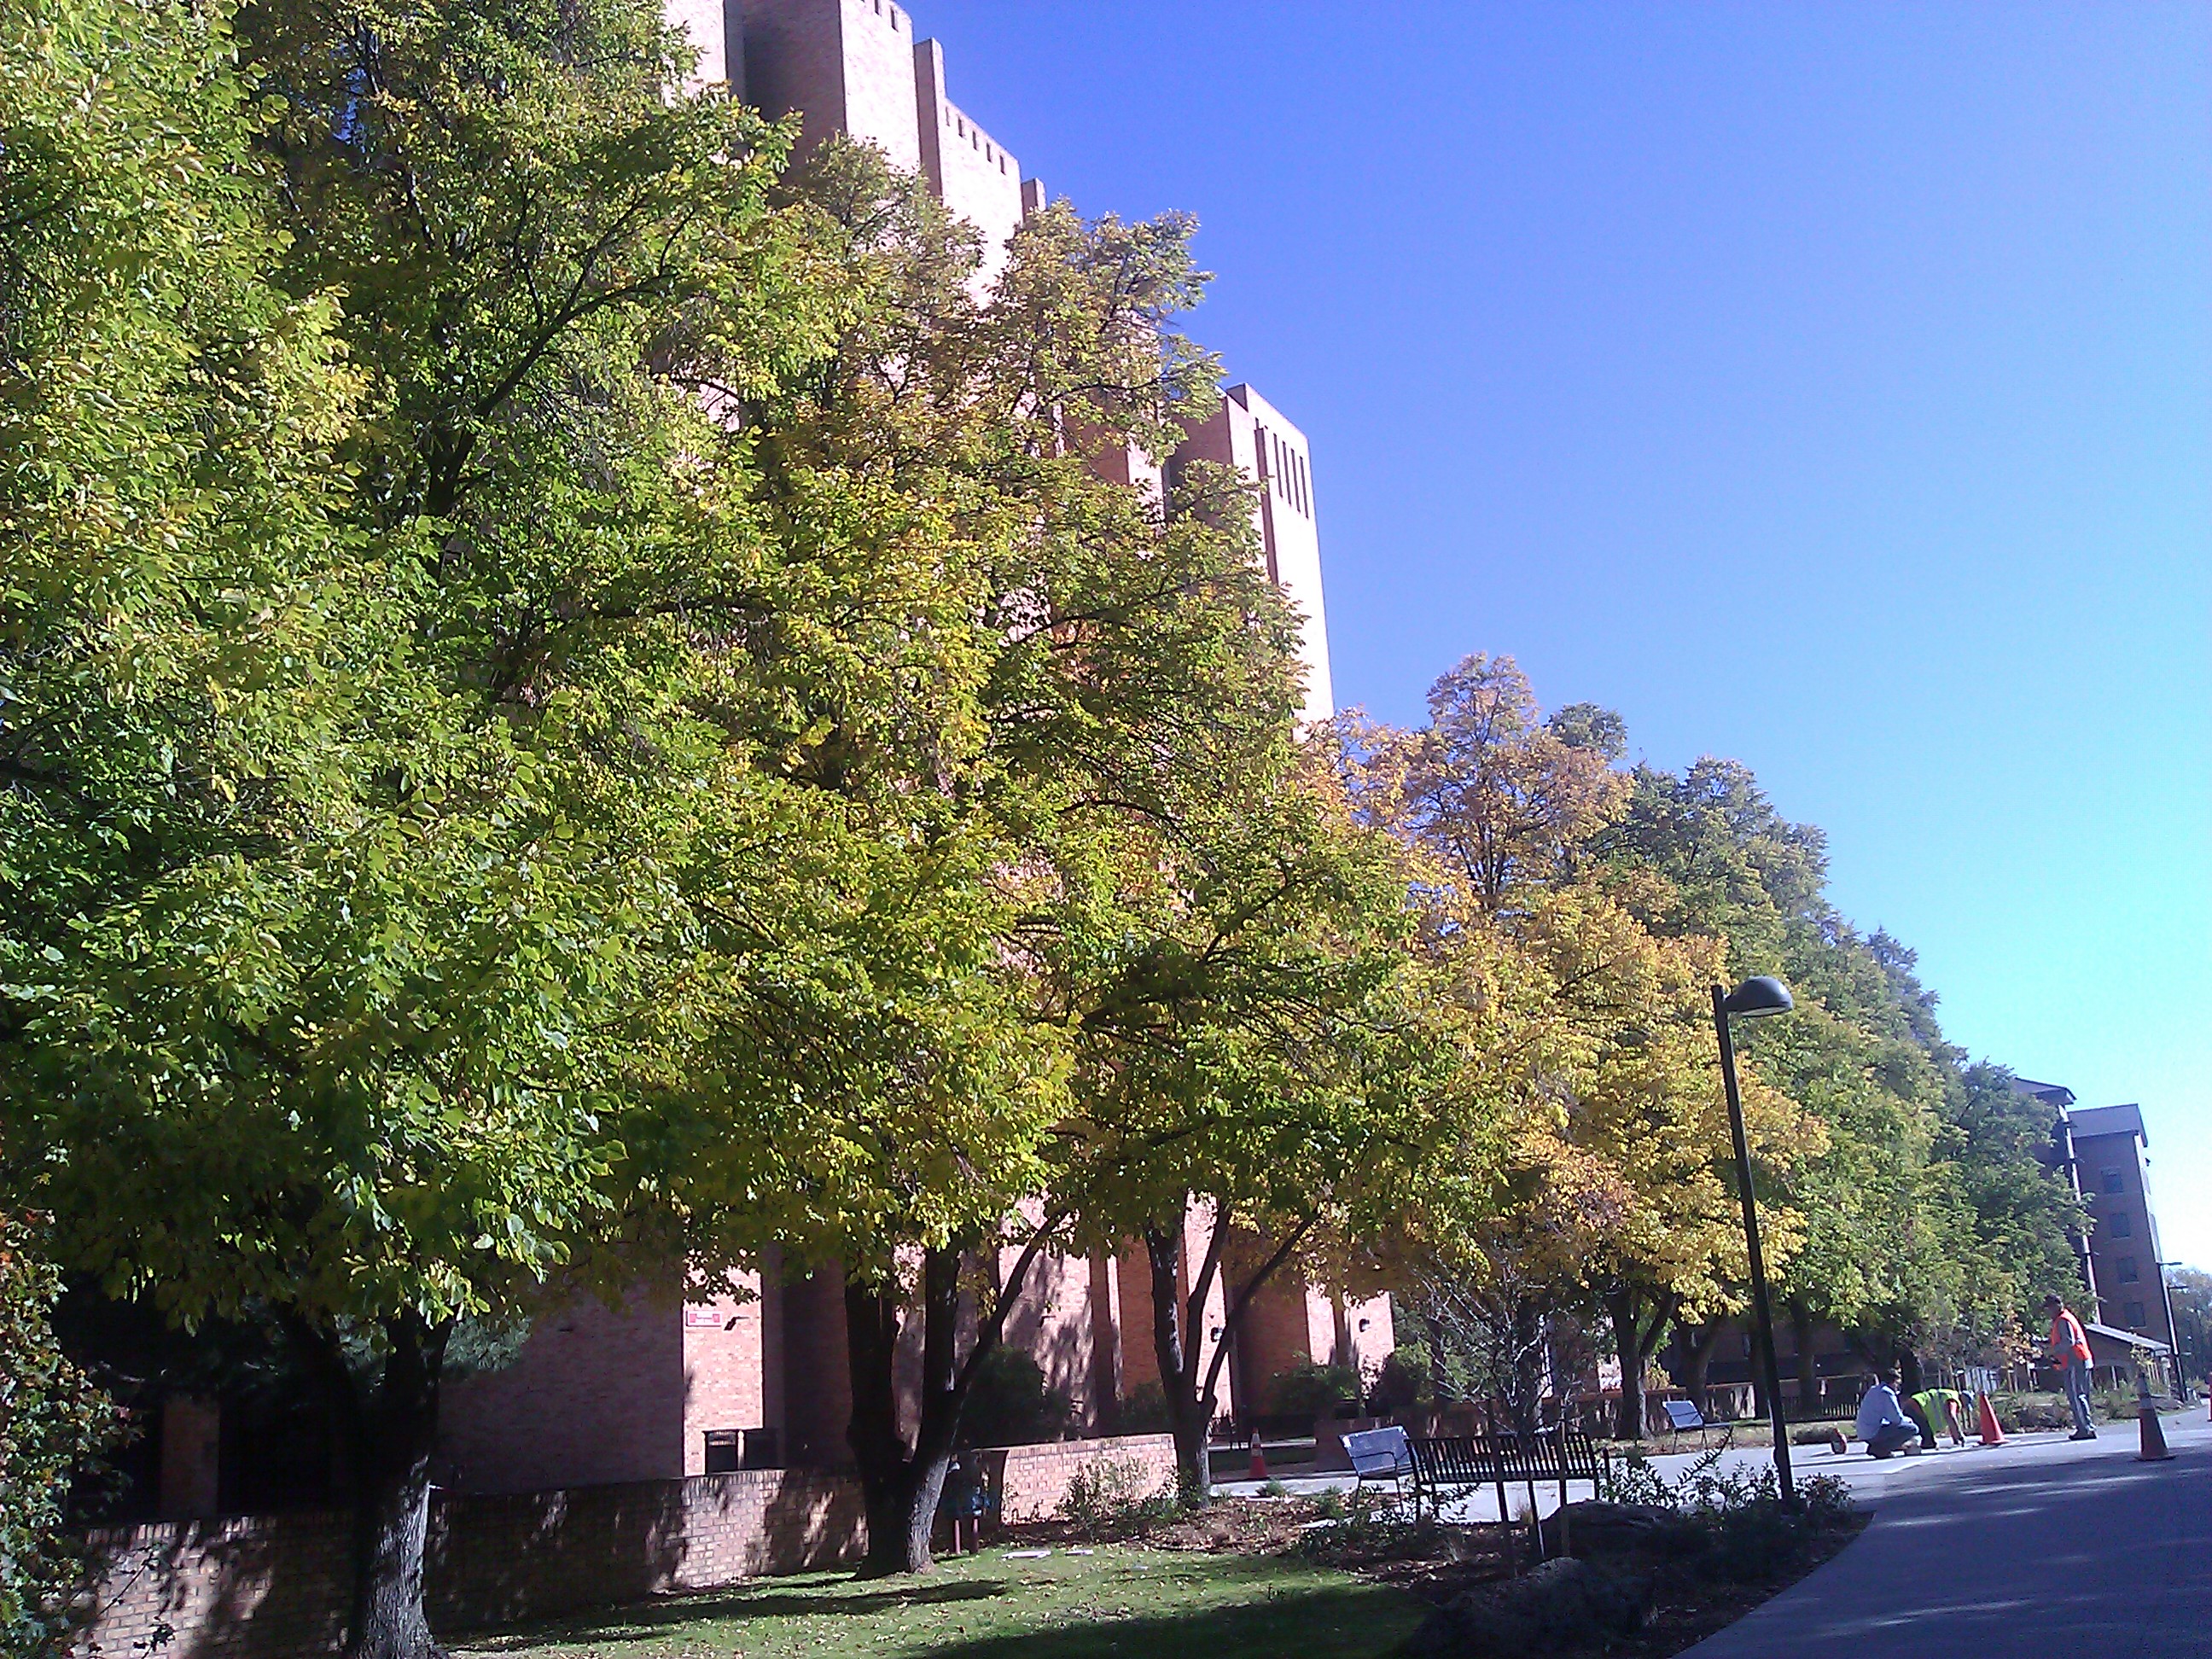 The University of Colorado - Boulder